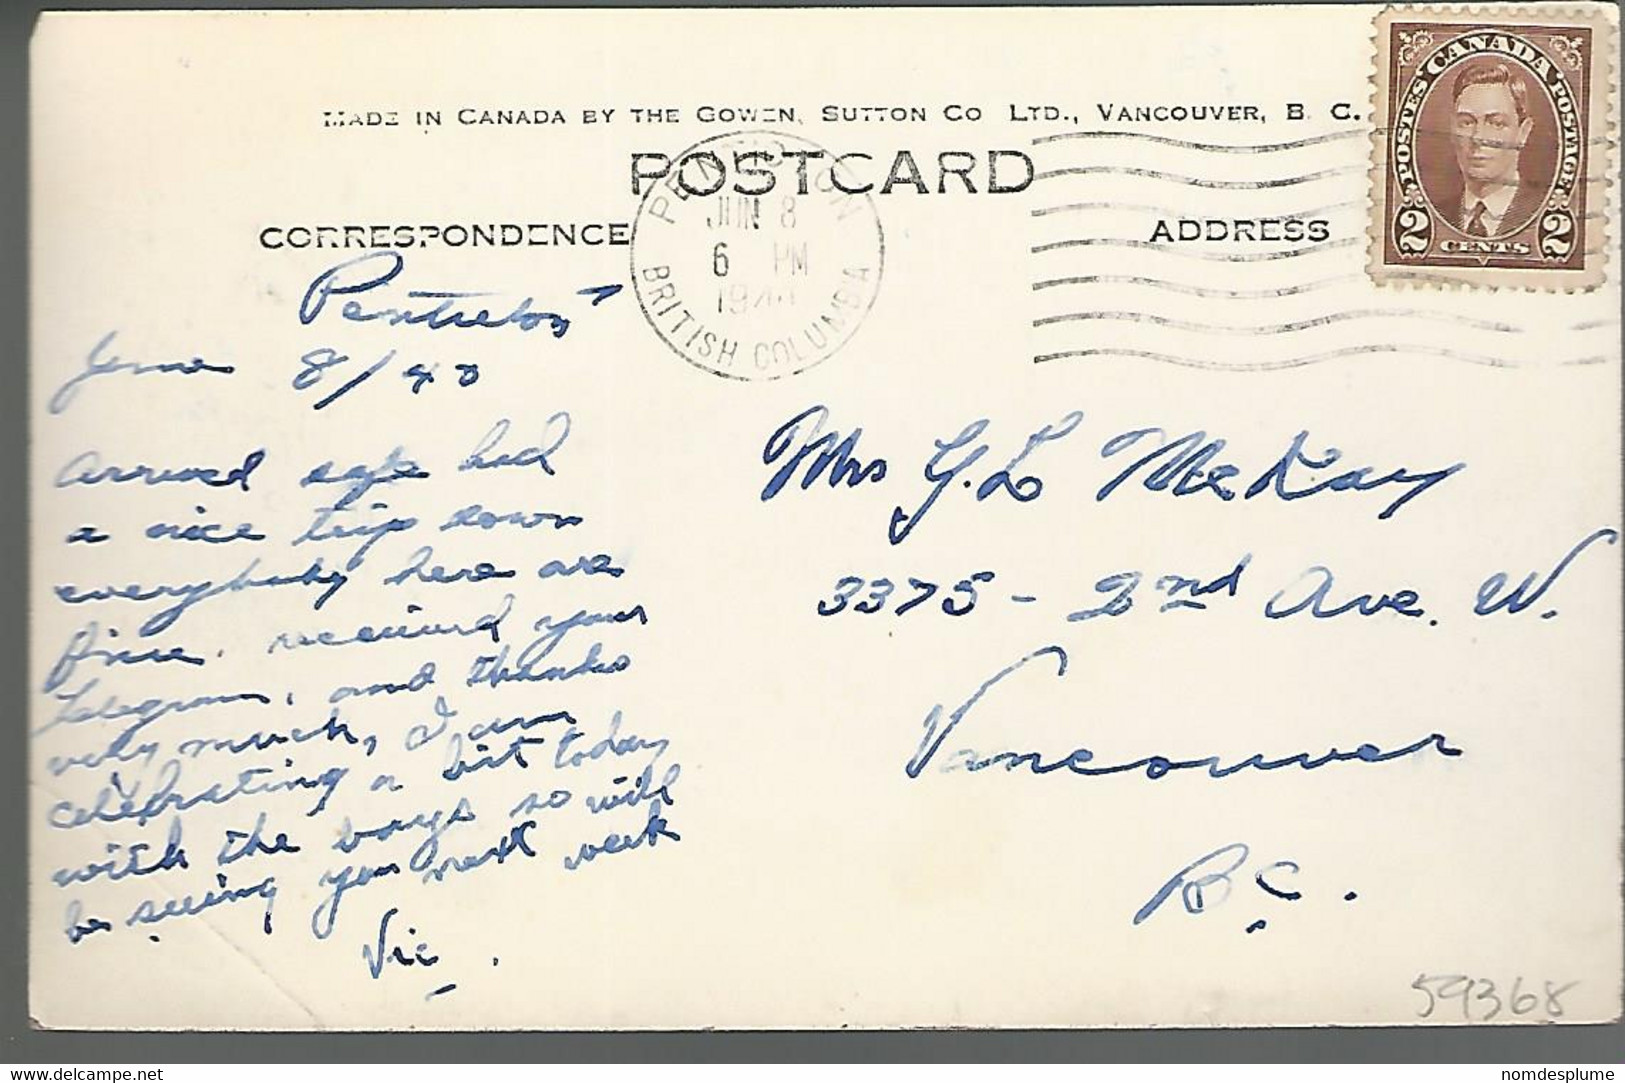 59368 ) BC Highway Okanagan Lake Penticton  Real Photo Postcard RPPC Undivided Back 1940 Postmark Cancel - Penticton